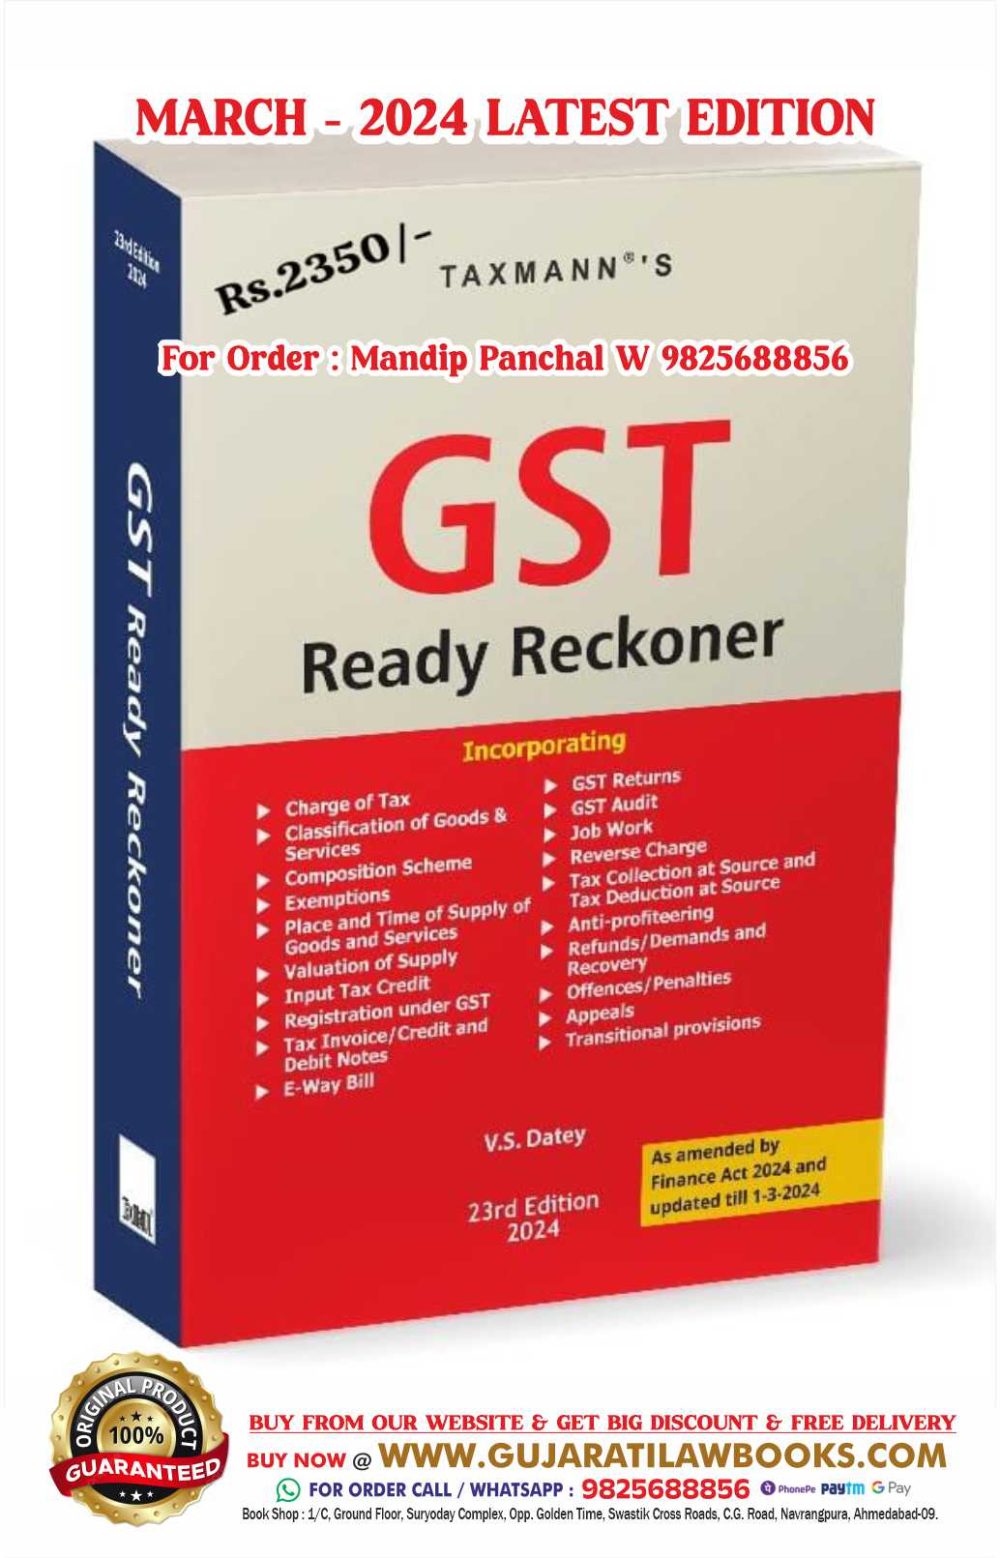 Taxmann's GST Ready Reckoner Updated till 1-3-2024 - Latest 23rd Edition March 2024